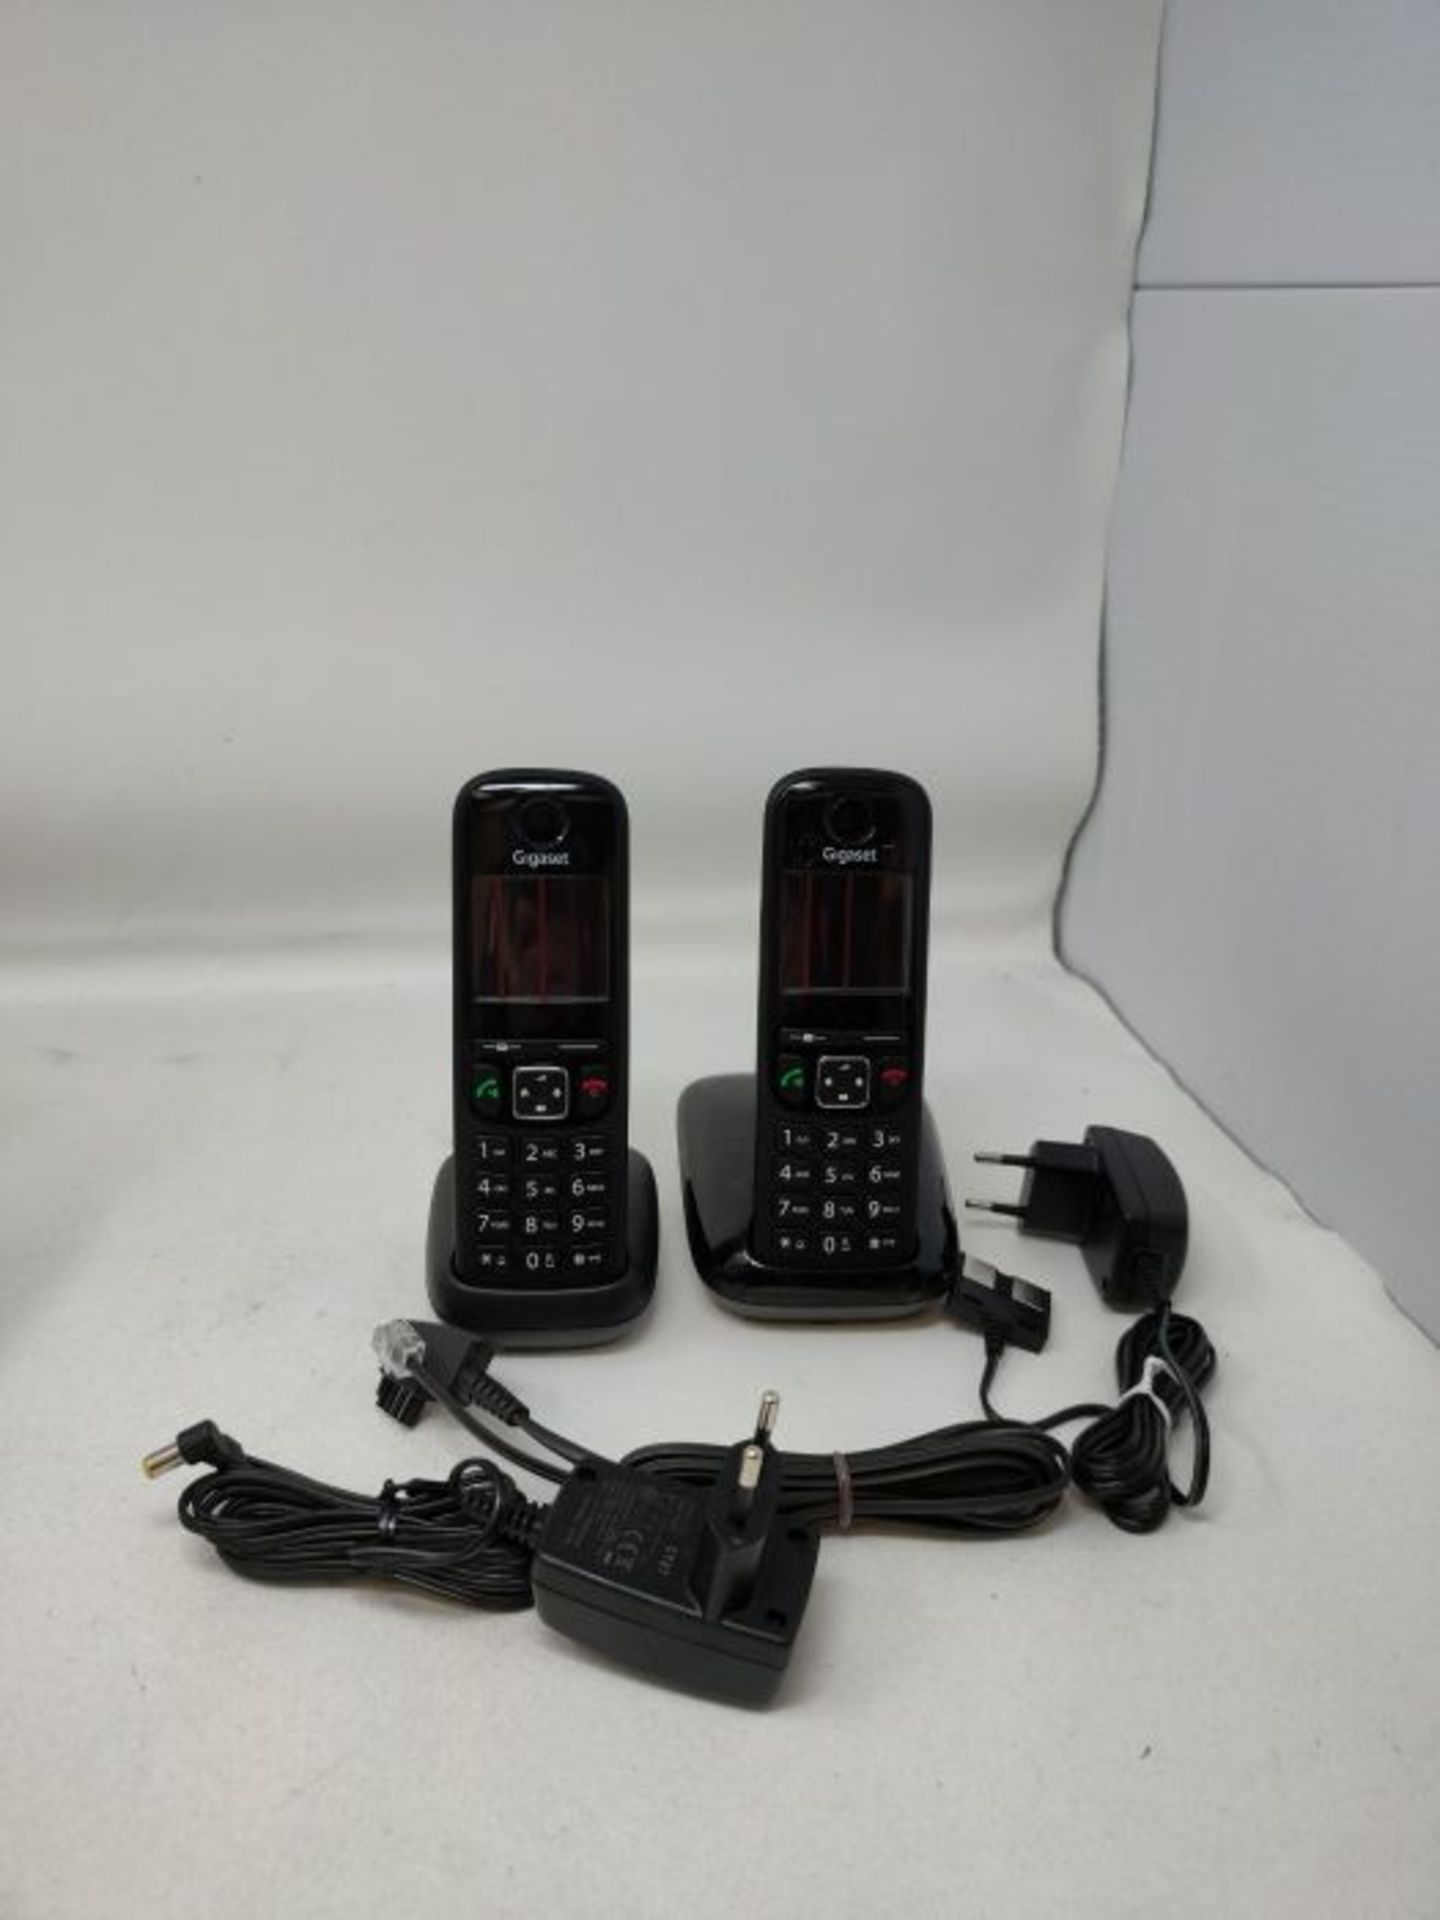 RRP £52.00 Gigaset AS690 Duo - 2 Schnurlose Telefone - groÃxes, kontrastreiches Display - brill - Image 2 of 2